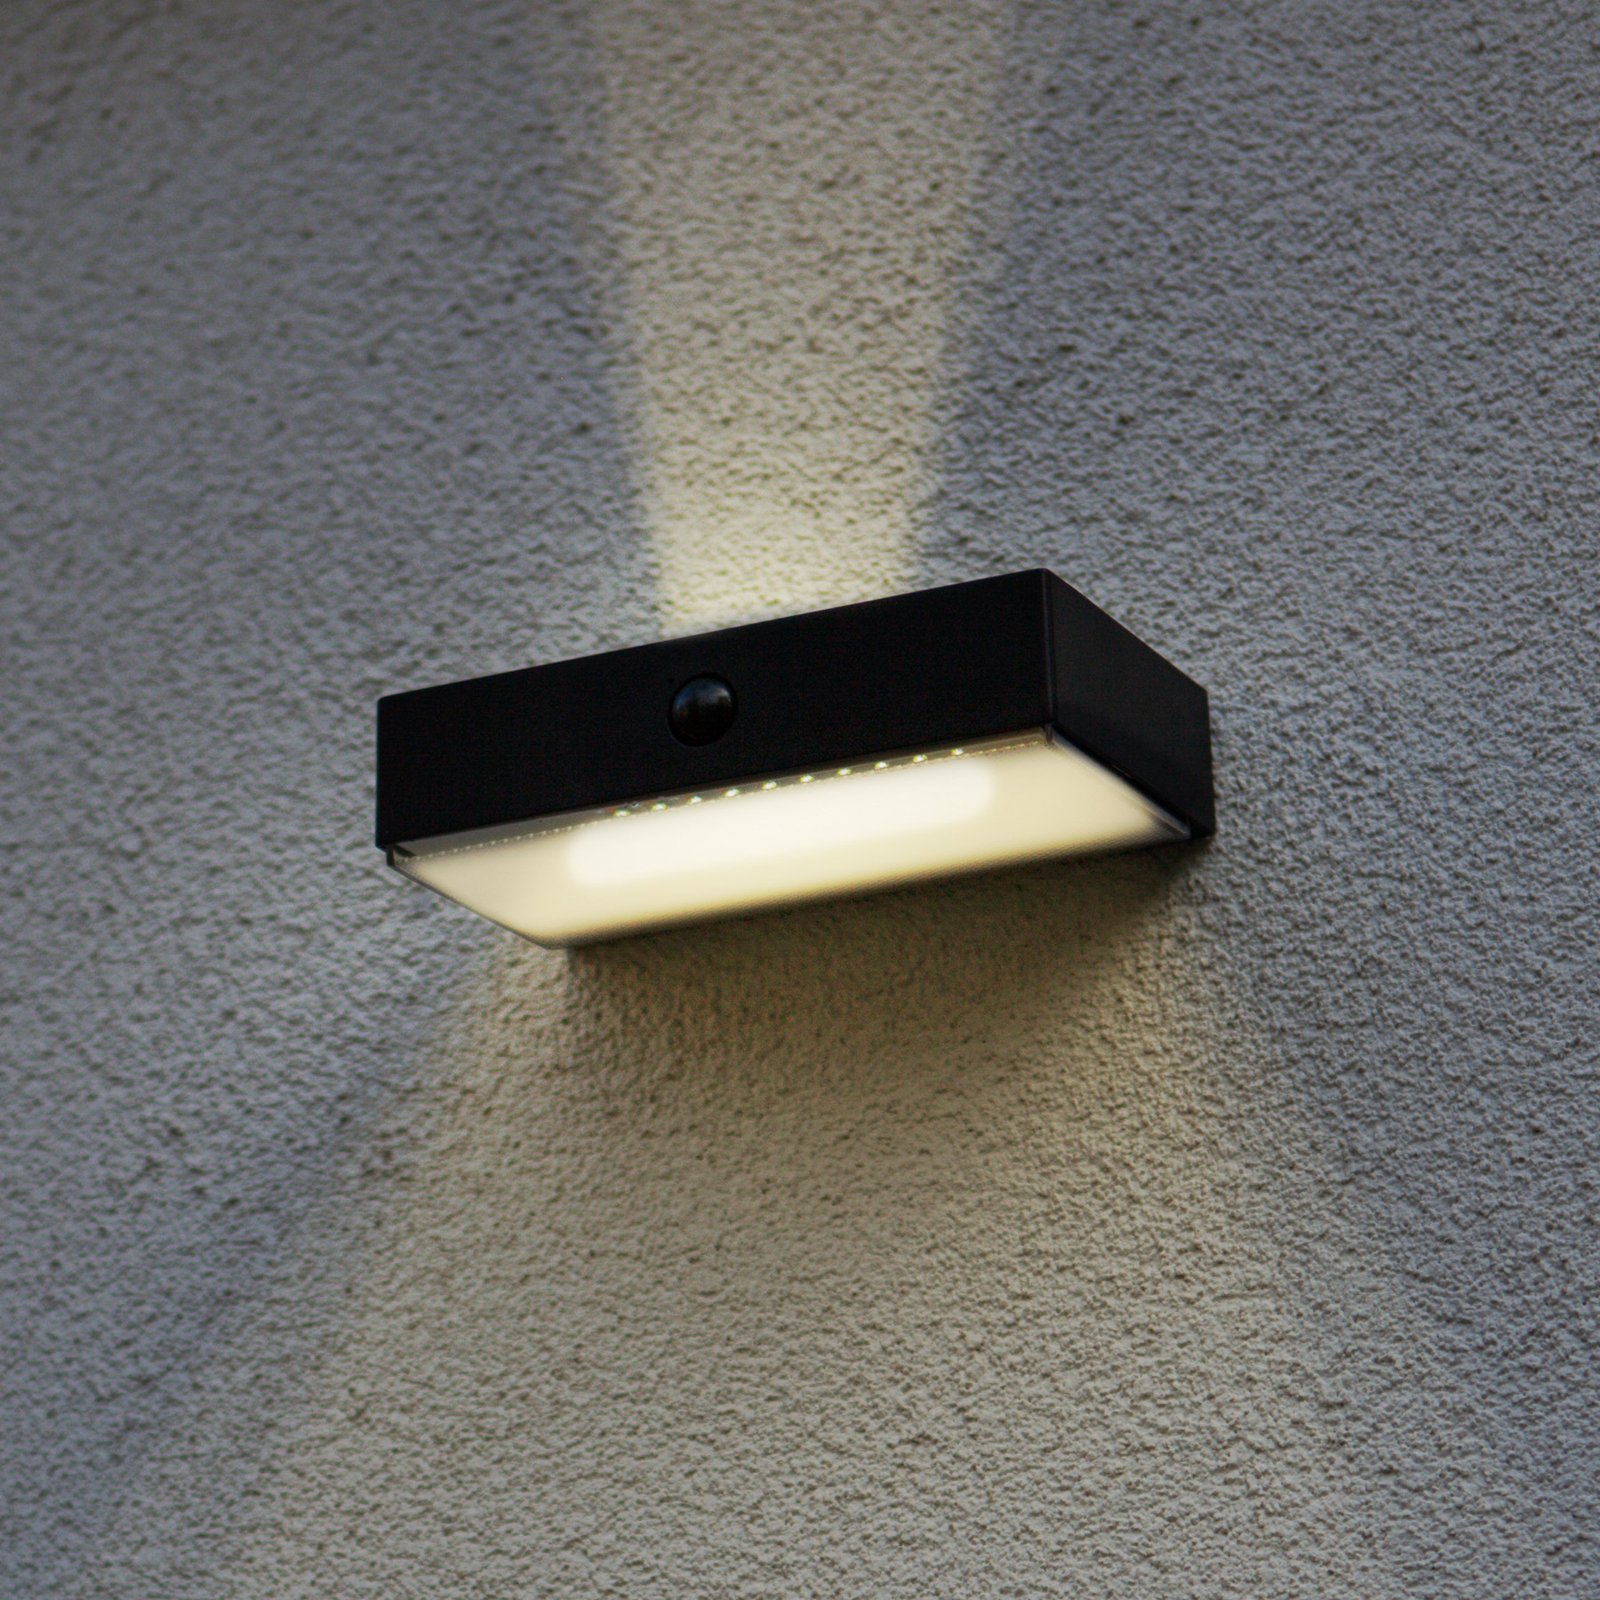 Fadi LED solar outdoor wall light, CCT